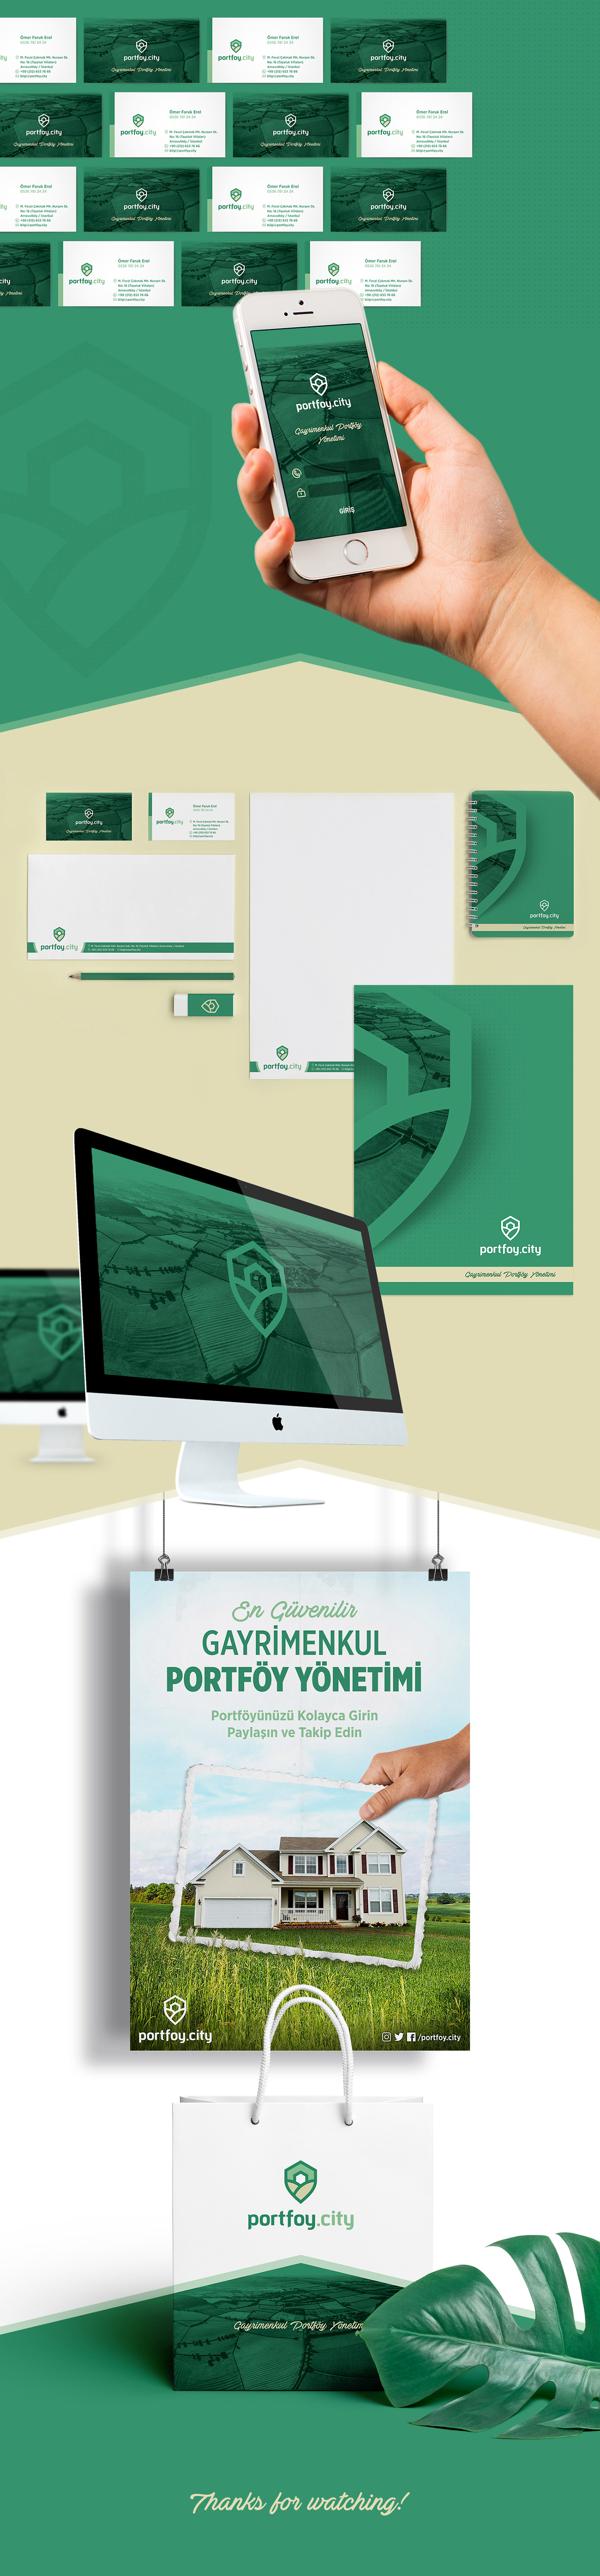 brand identity kurumsal kimlik design tasarım logo istanbul poster green